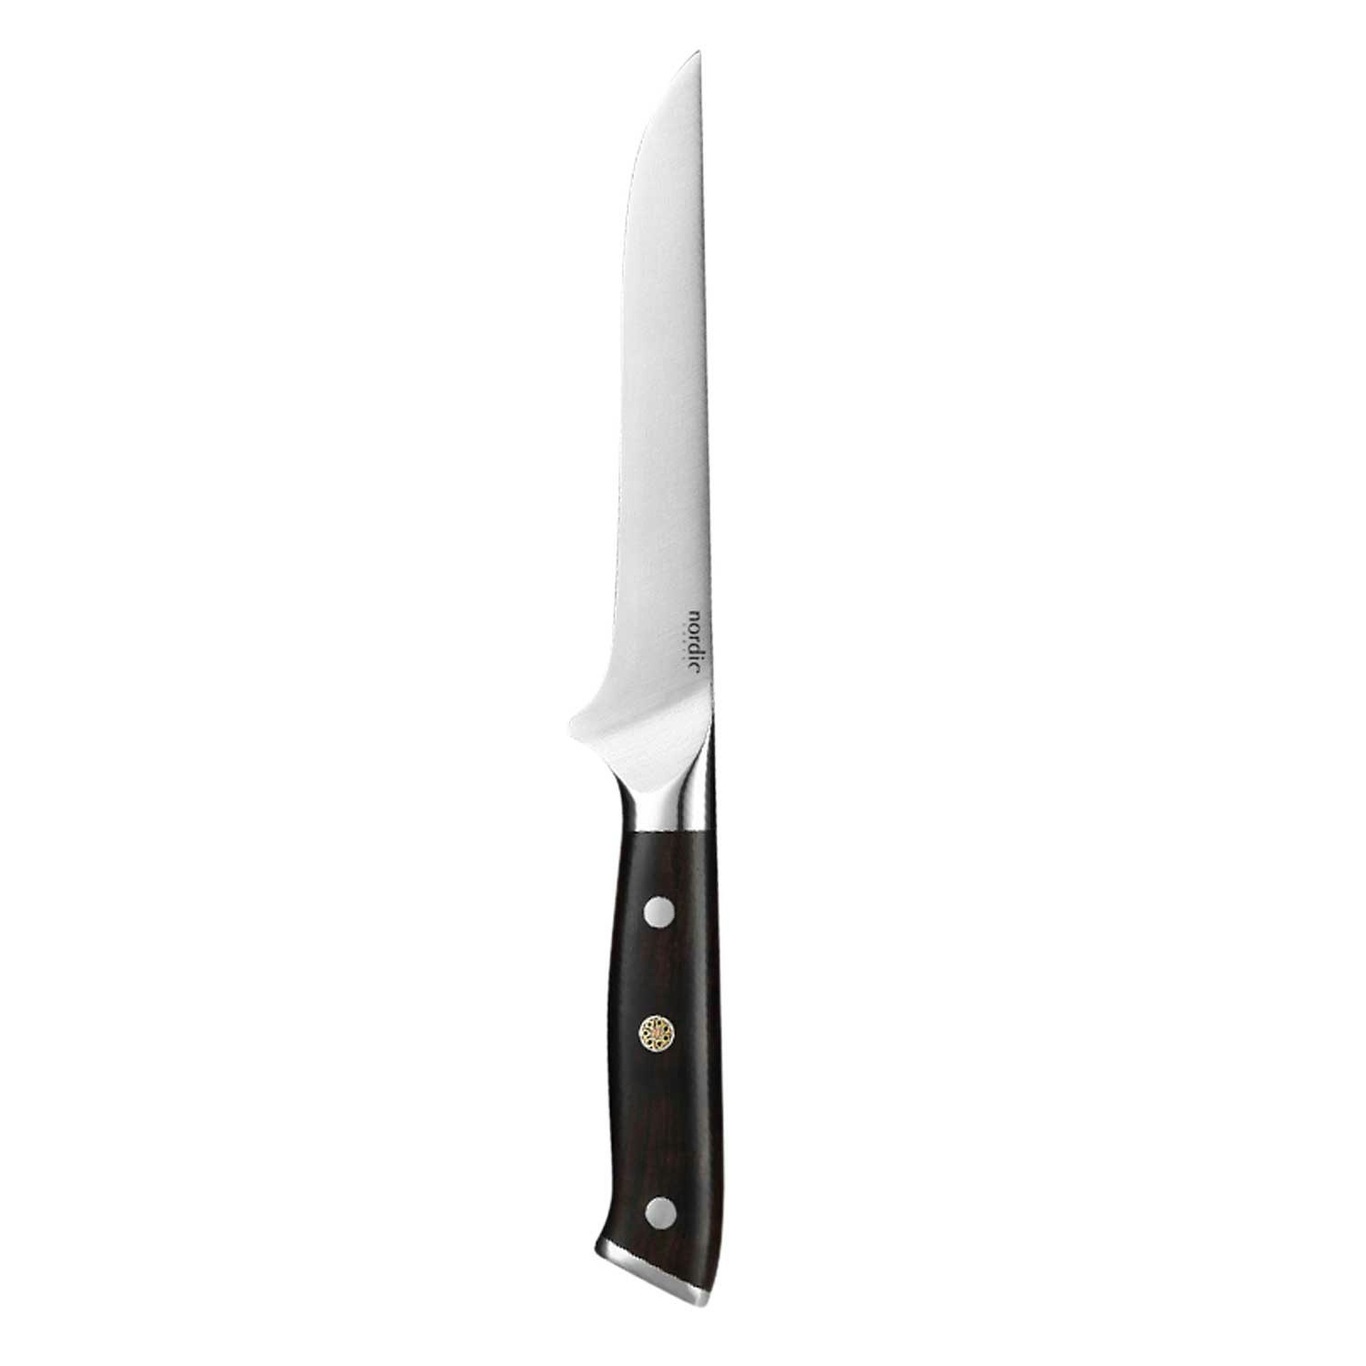 https://royaldesign.com/image/11/nordic-chef-nordic-fillet-knife-29-cm-0?w=800&quality=80